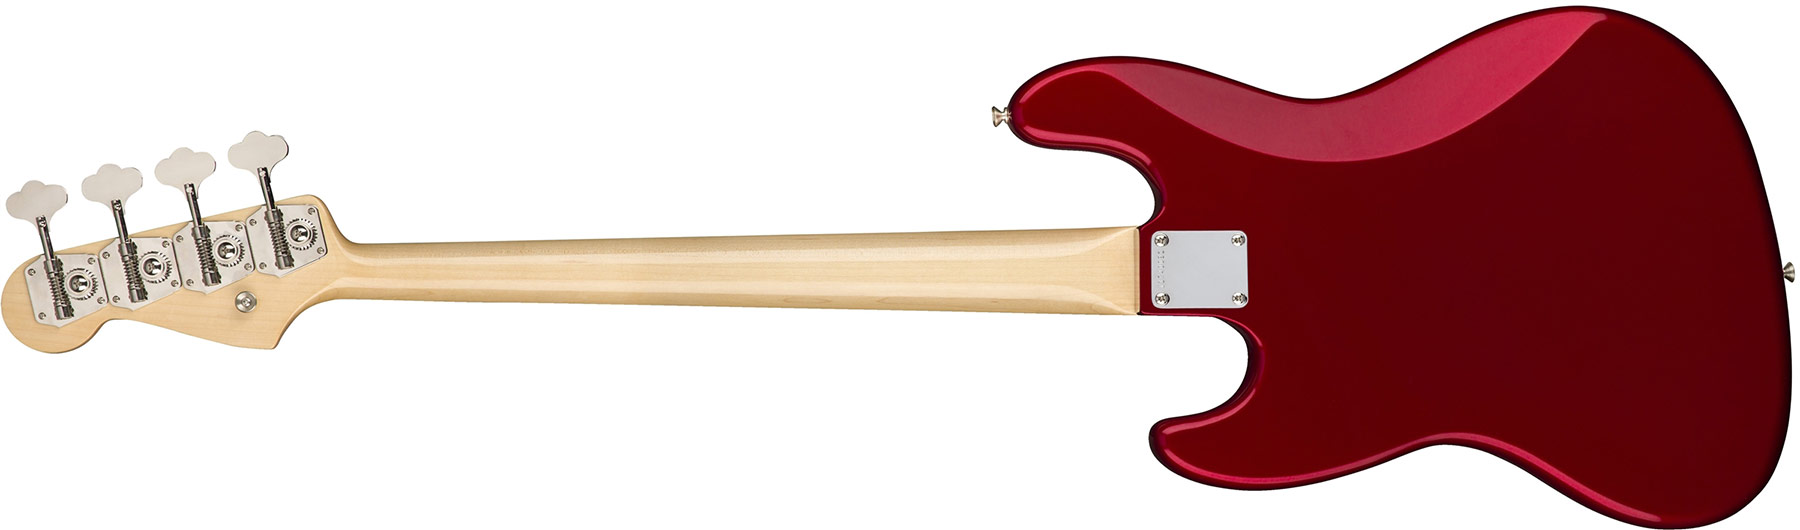 Fender Jazz Bass '60s American Original Usa Rw - Candy Apple Red - Solidbody E-bass - Variation 2